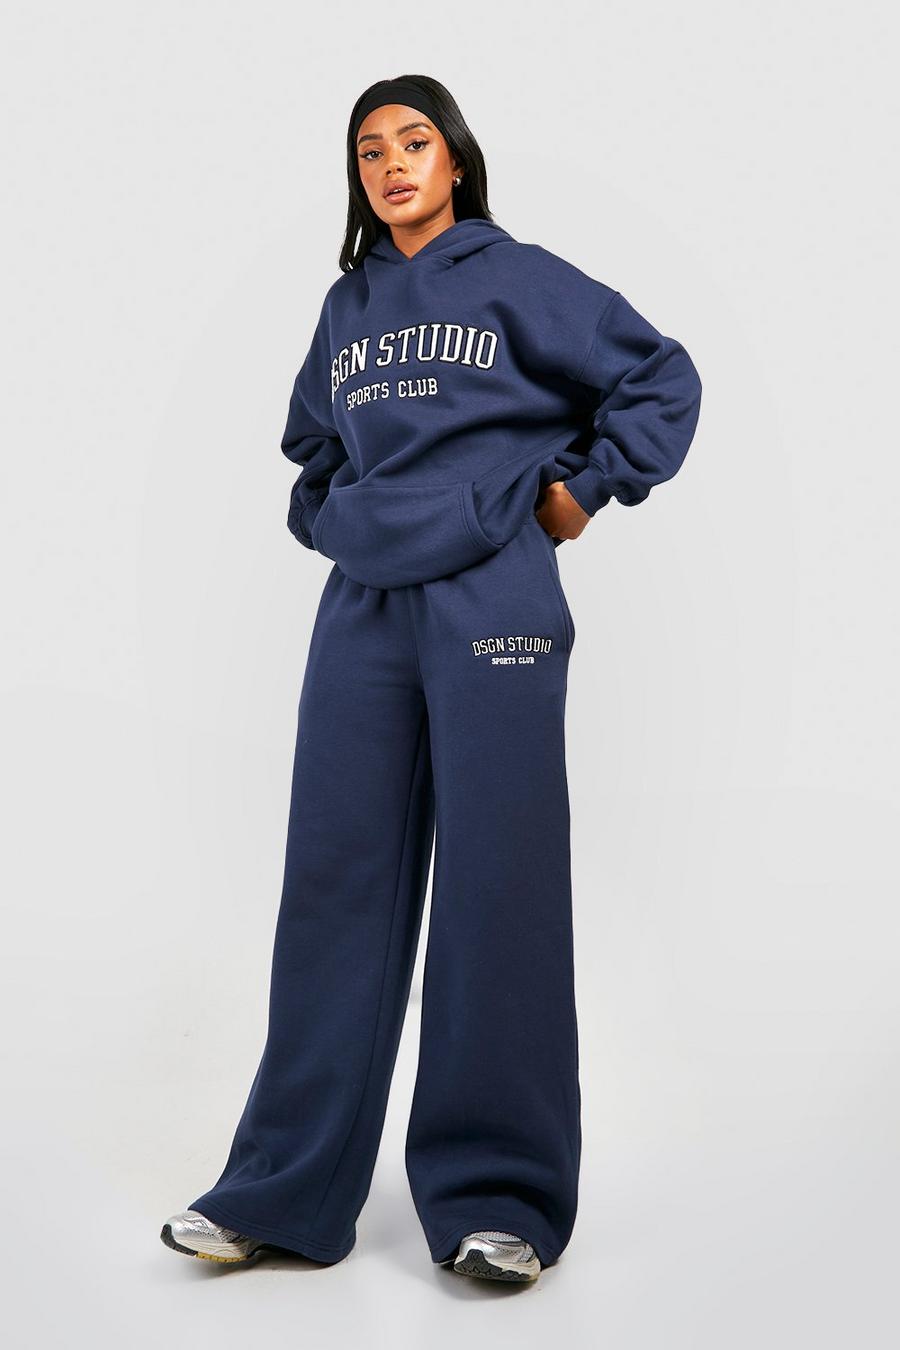 Pantalón deportivo recto con aplique Dsgn Studio, Navy